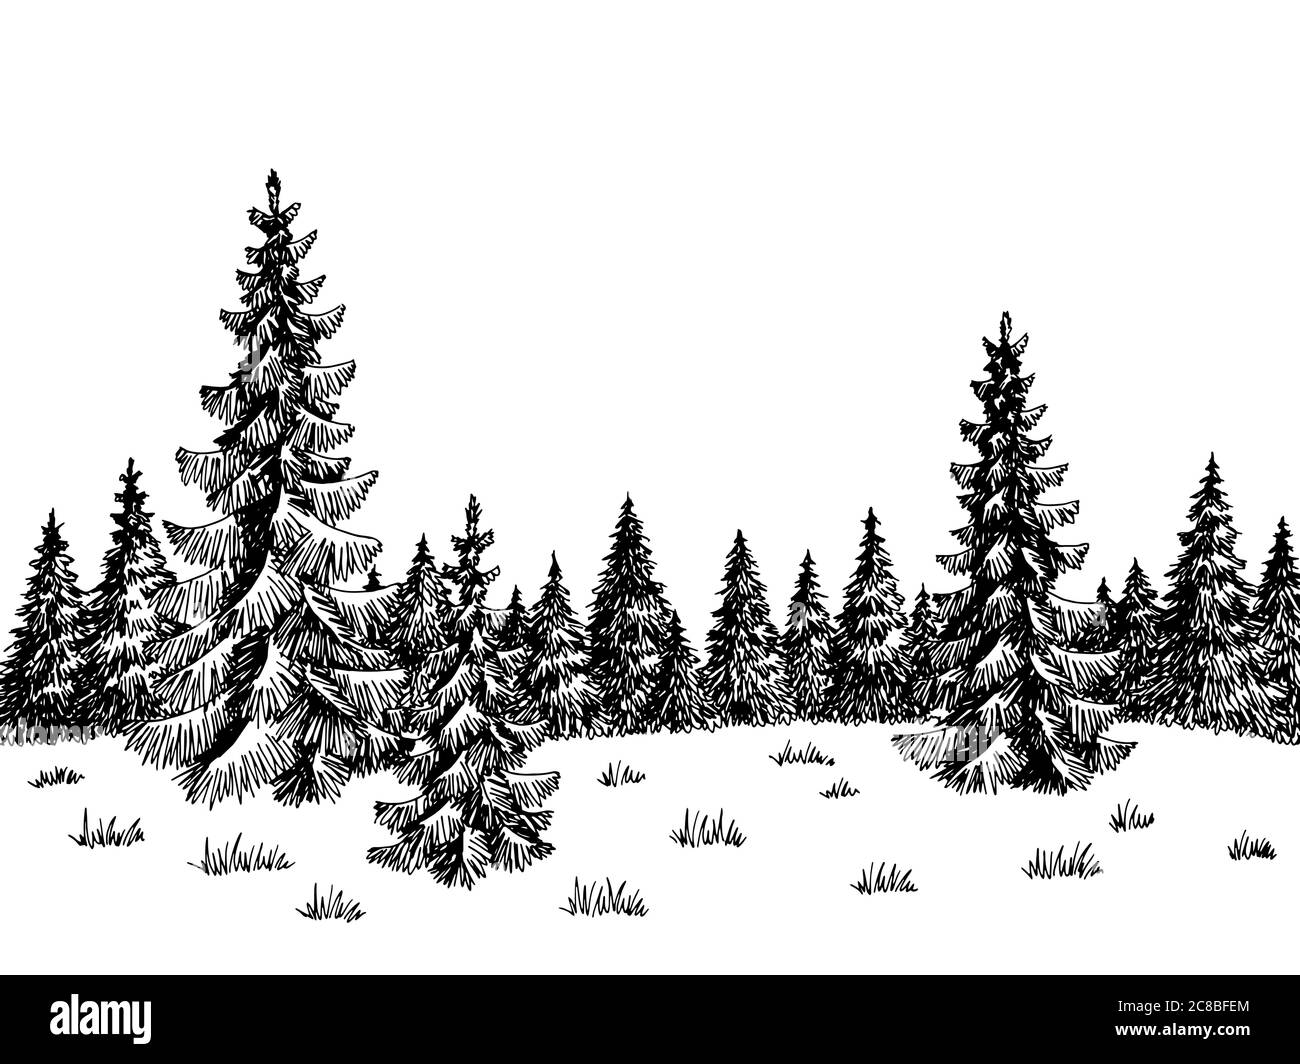 Fir forest graphic black white landscape sketch illustration vector Stock Vector